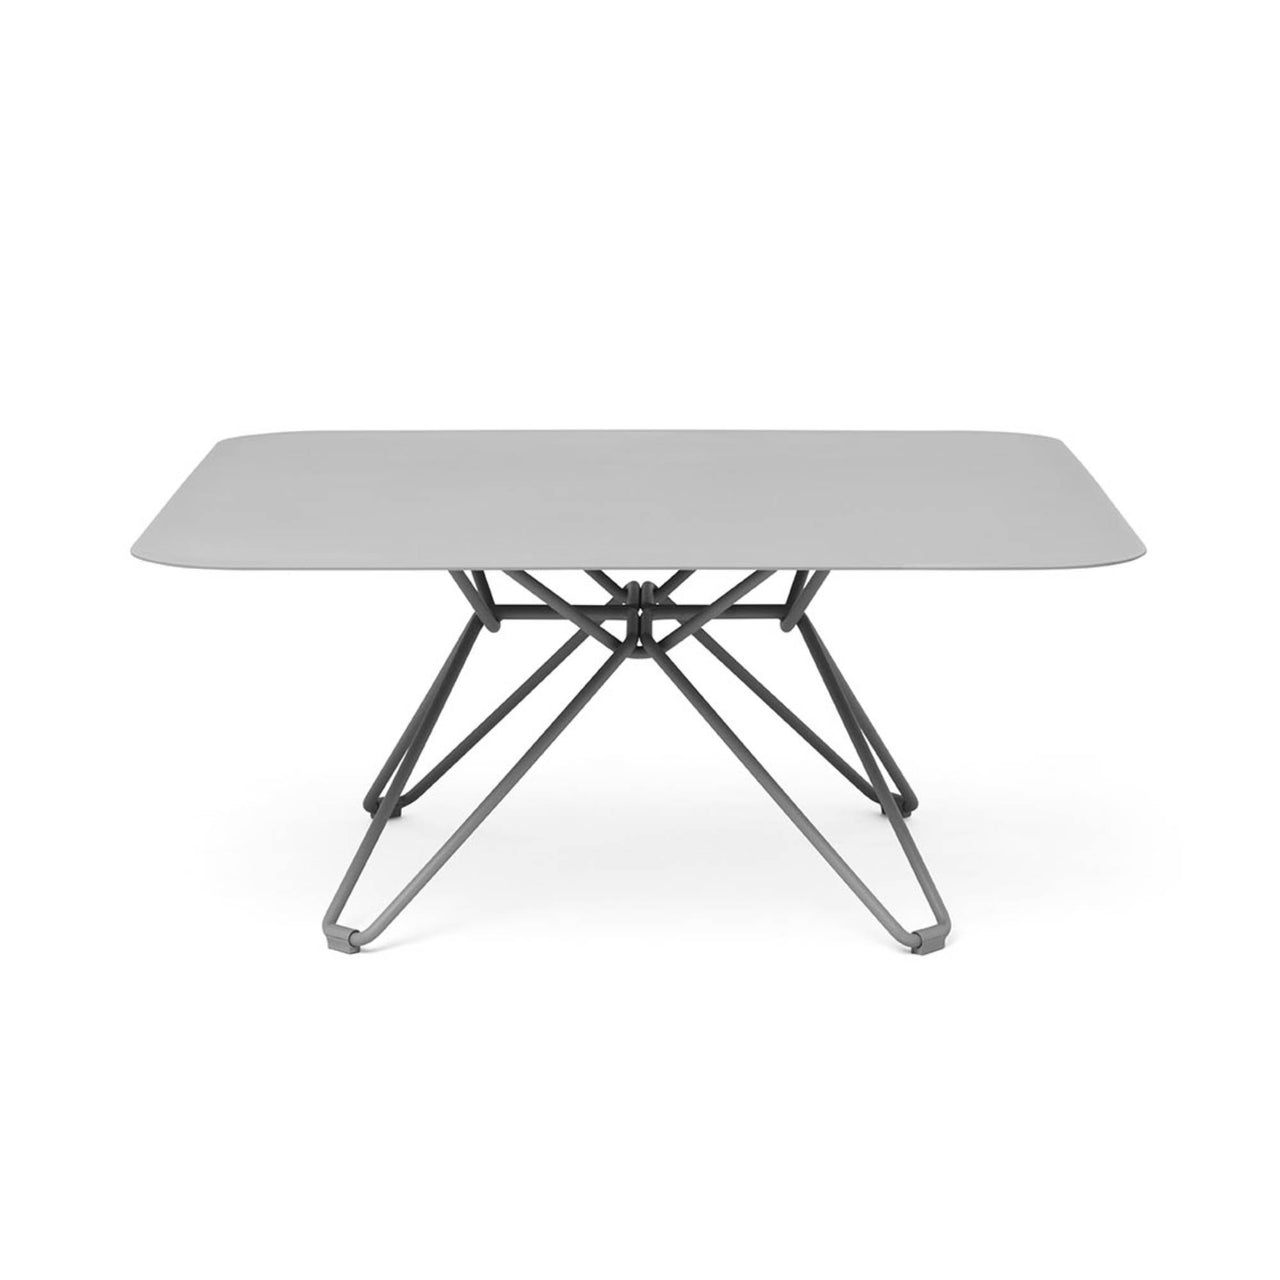 Tio Coffee Table: Square + Stone Grey Metal